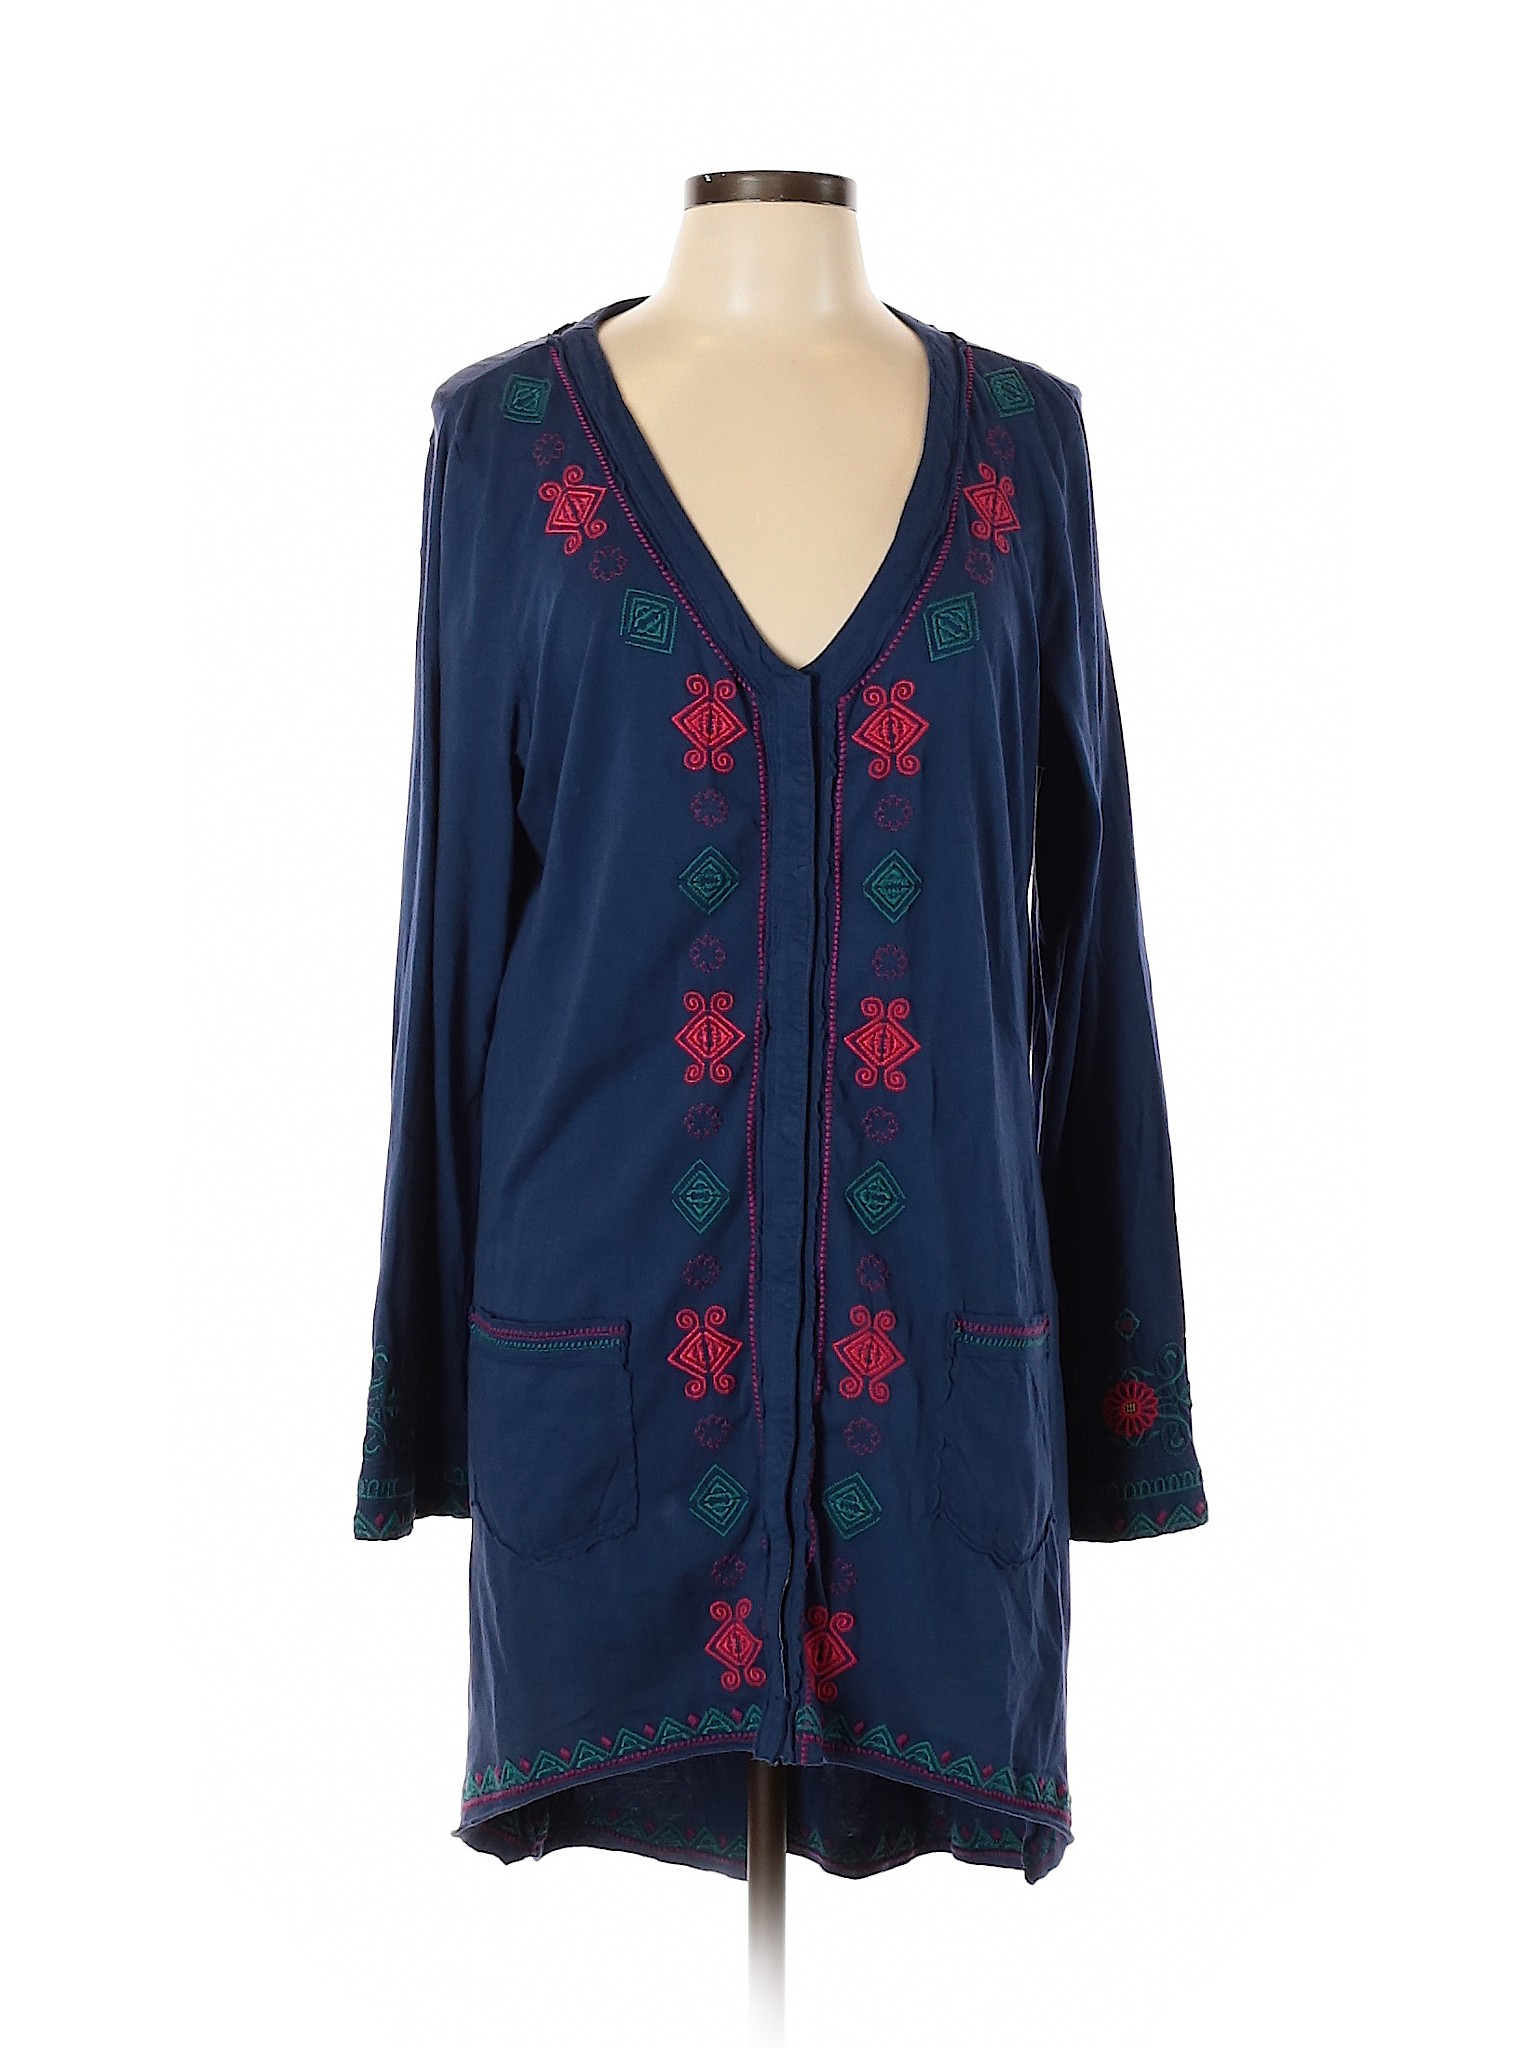 JW Los Angeles 100% Cotton Floral Solid Blue Casual Dress Size XL - 64% ...